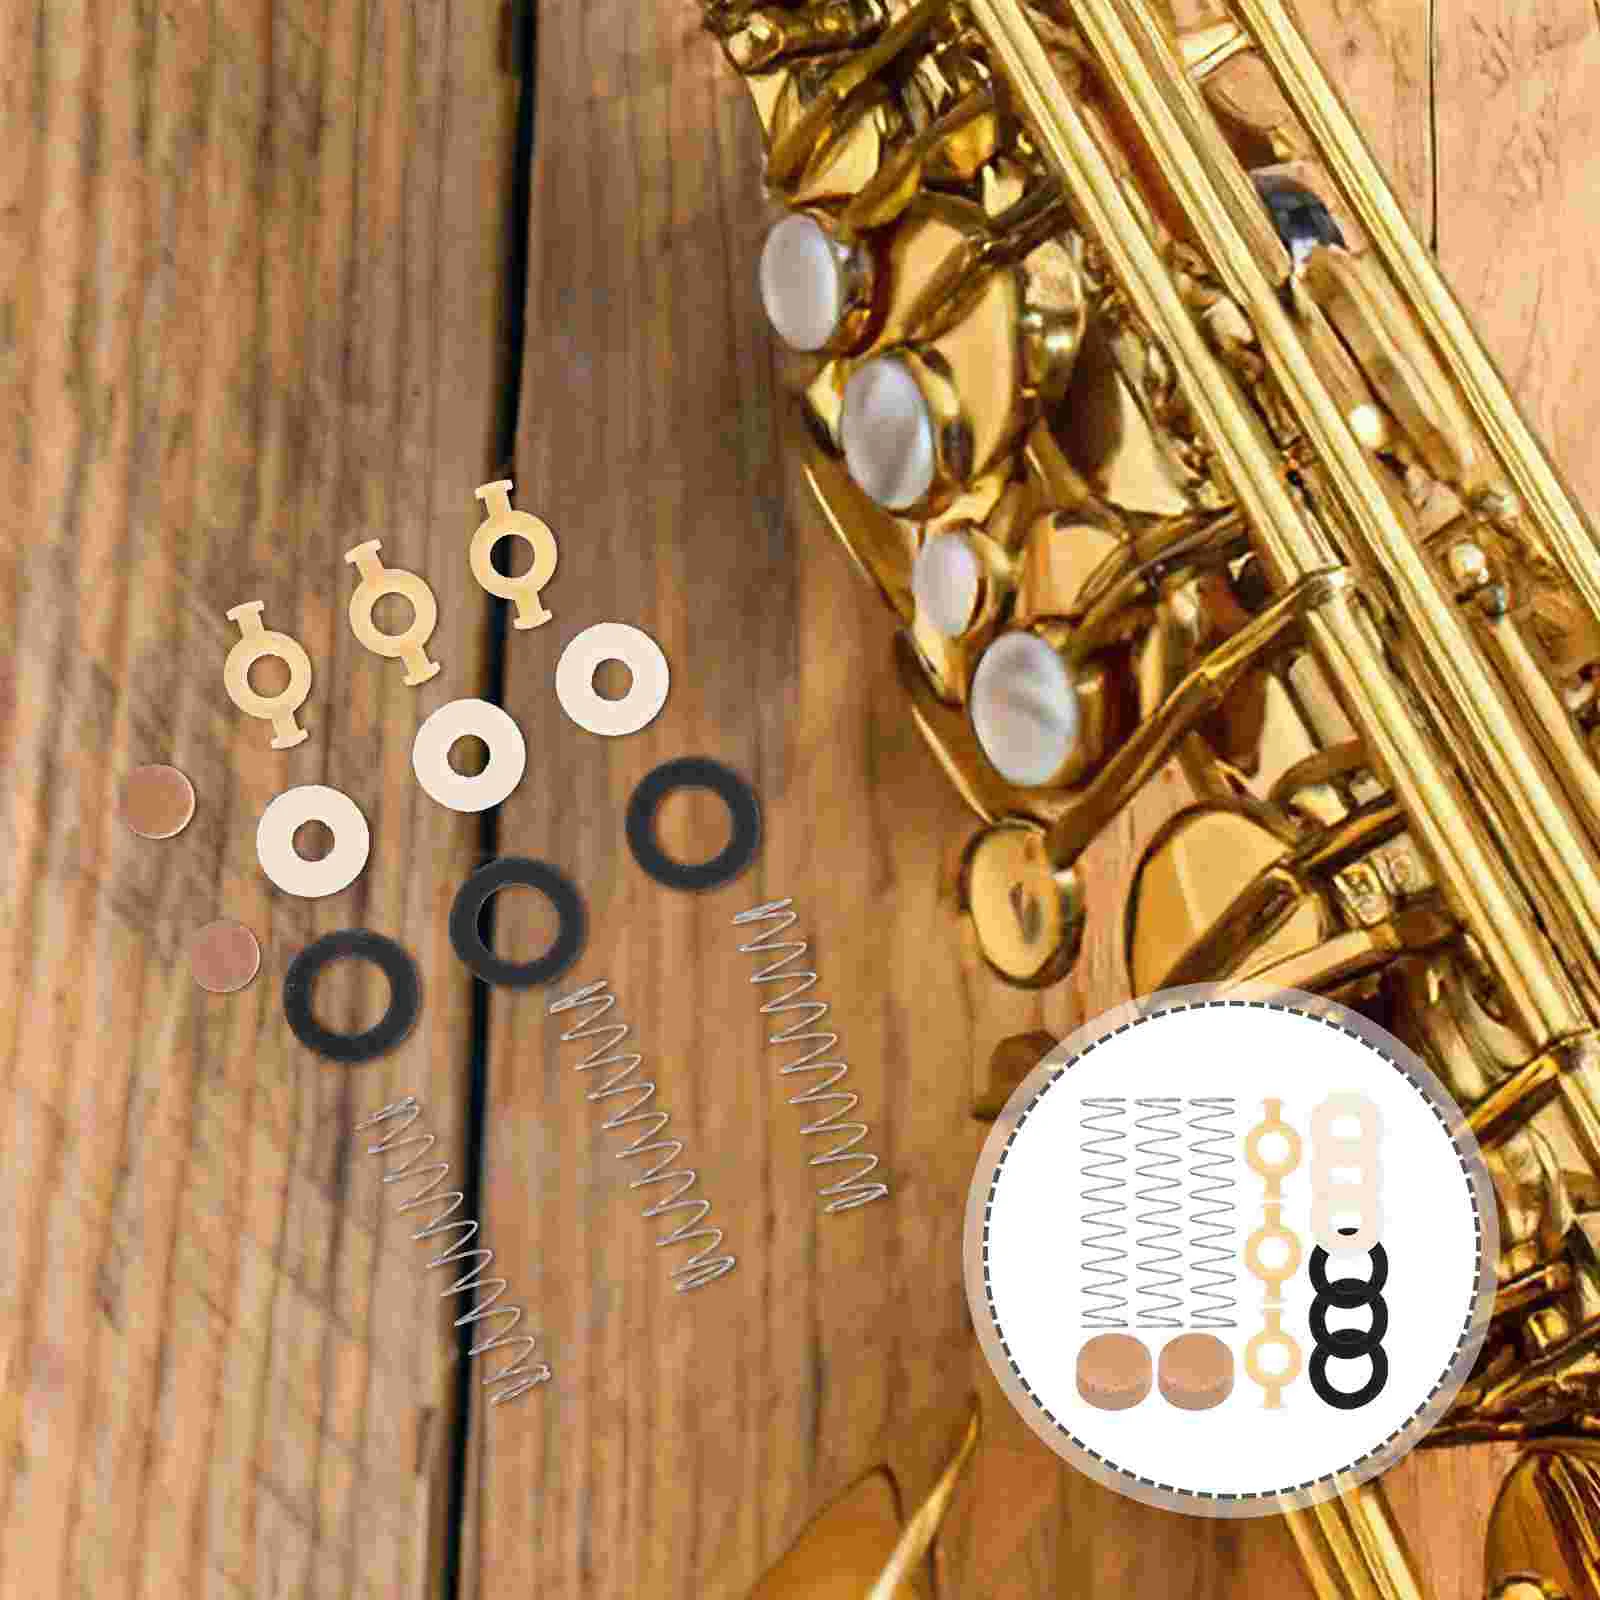 

Trumpet Valve Repair Kit Trumpet Bumper Stopper Valve Guide Trumpet Felt Washer Musical Instrument Maintenance Mouthpiece